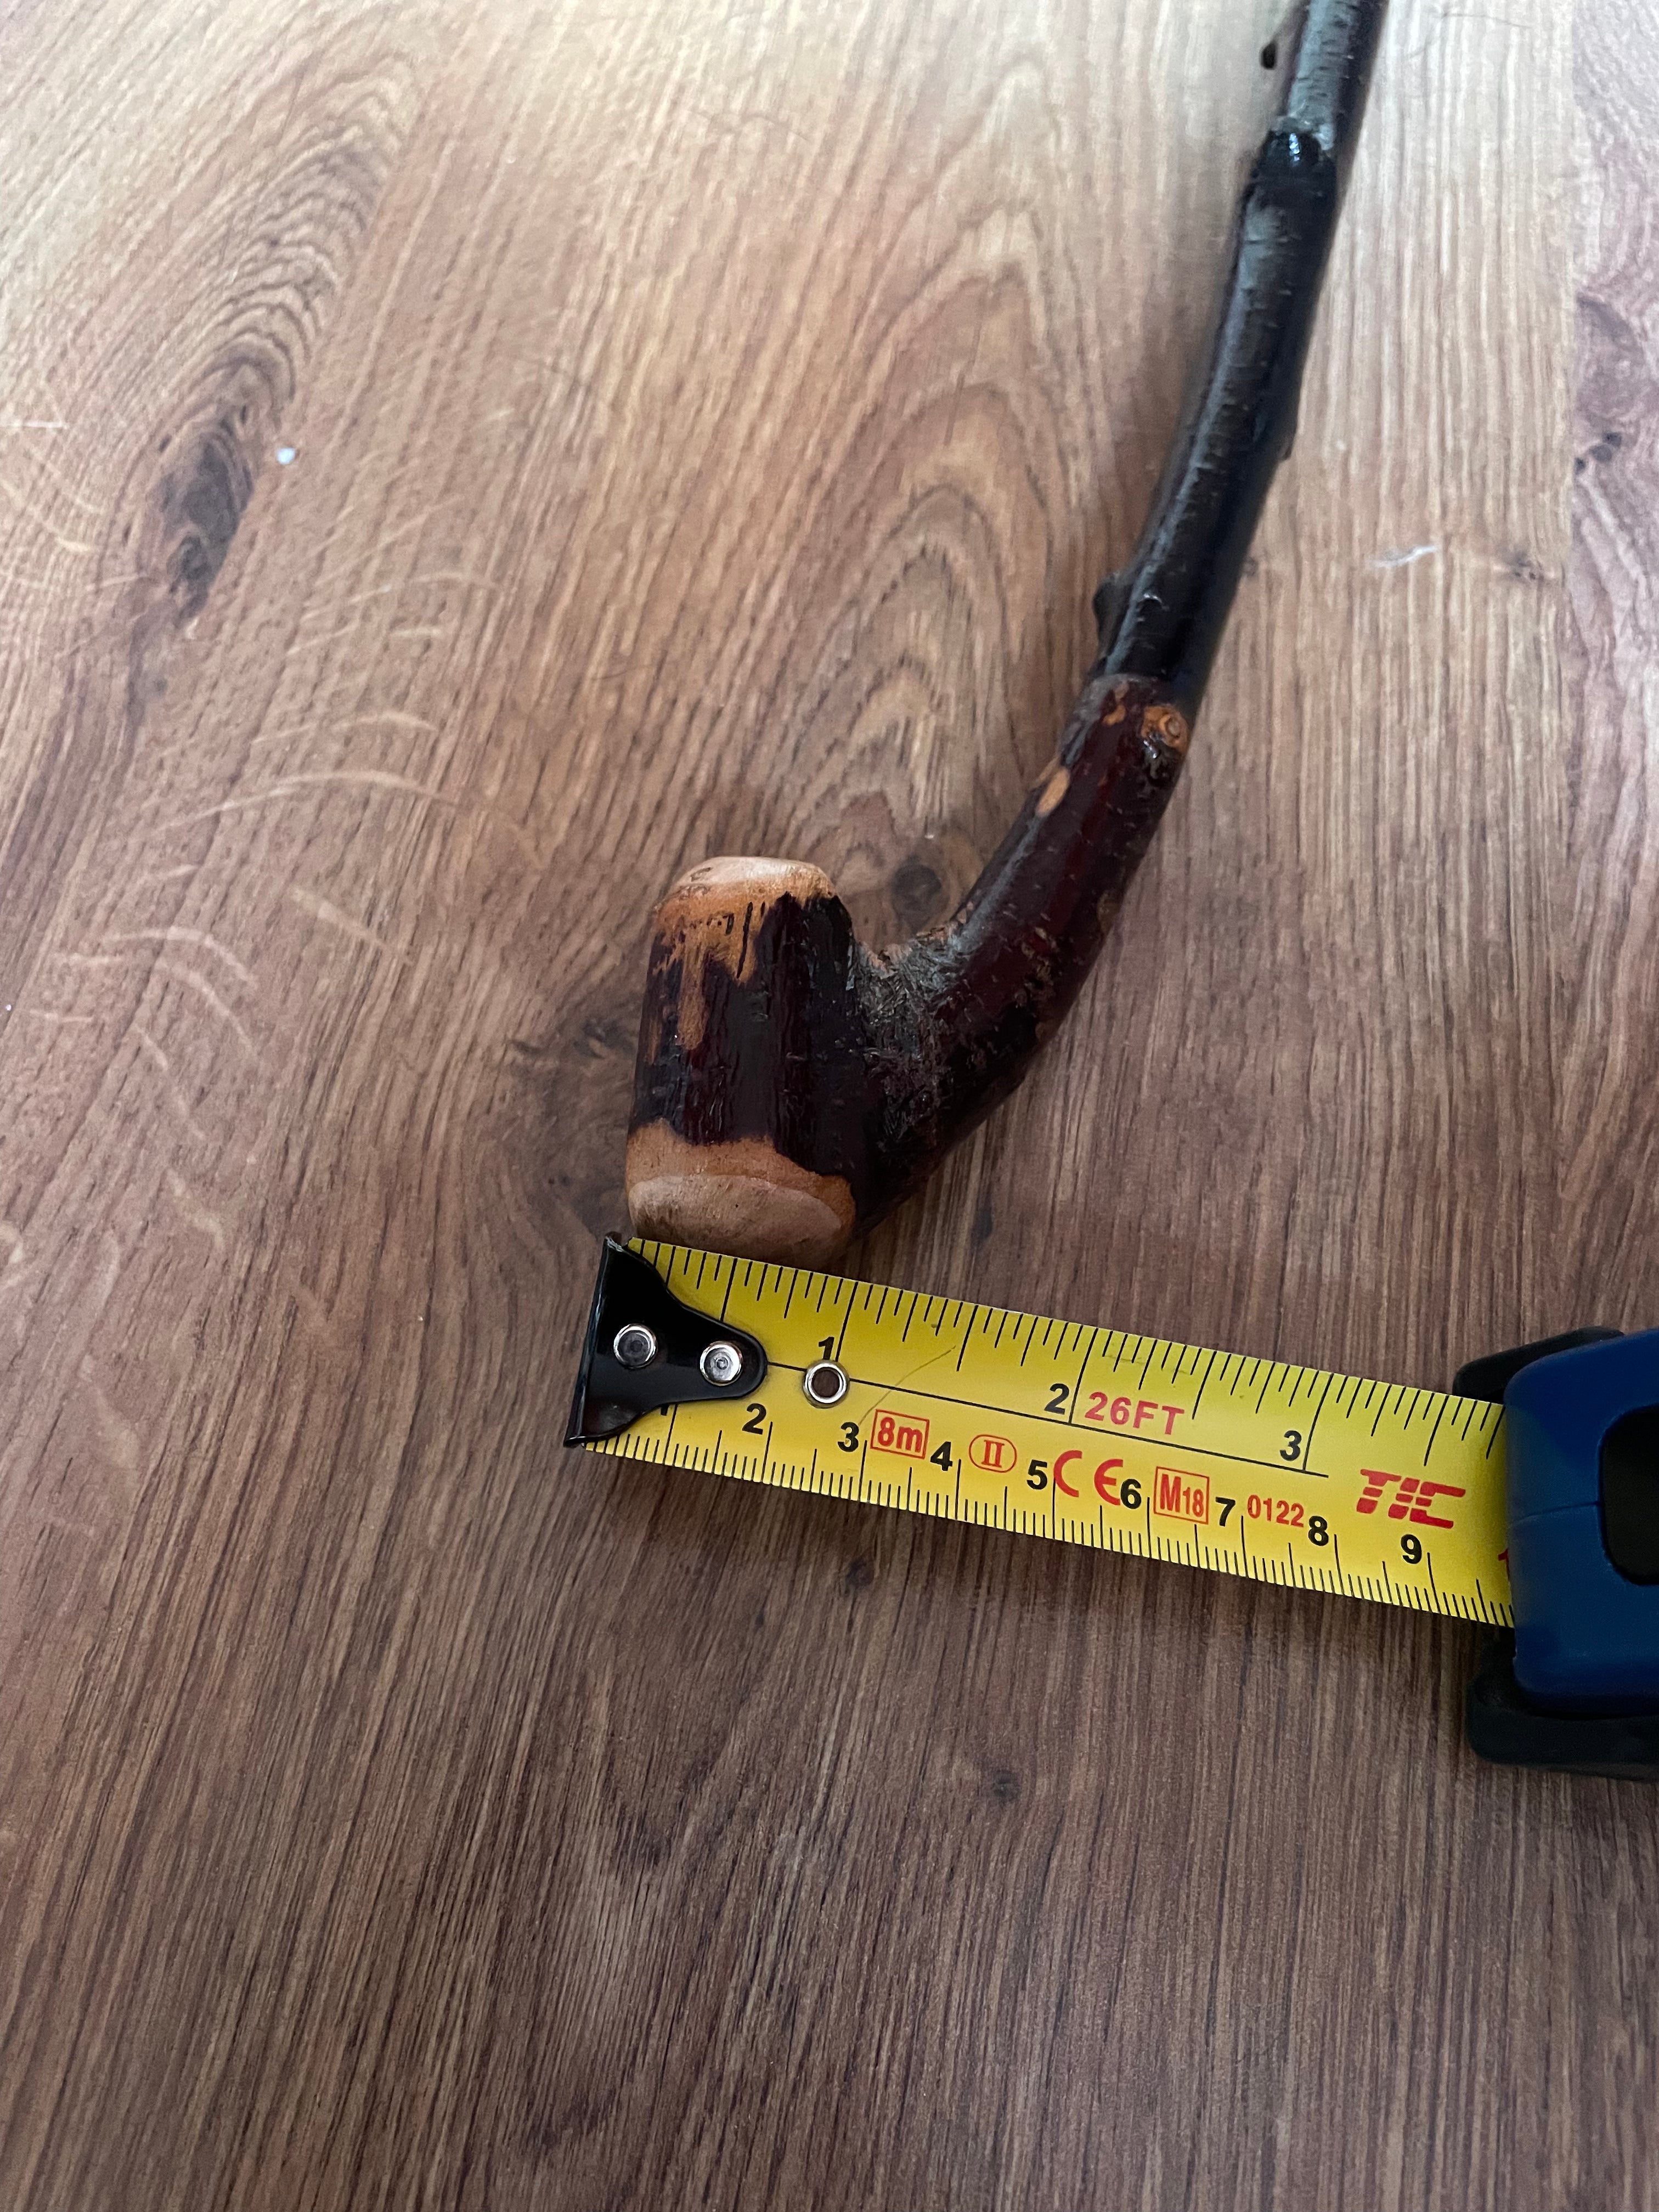 Blackthorn Walking Stick 35 3/4 inch - Handmade in Ireland